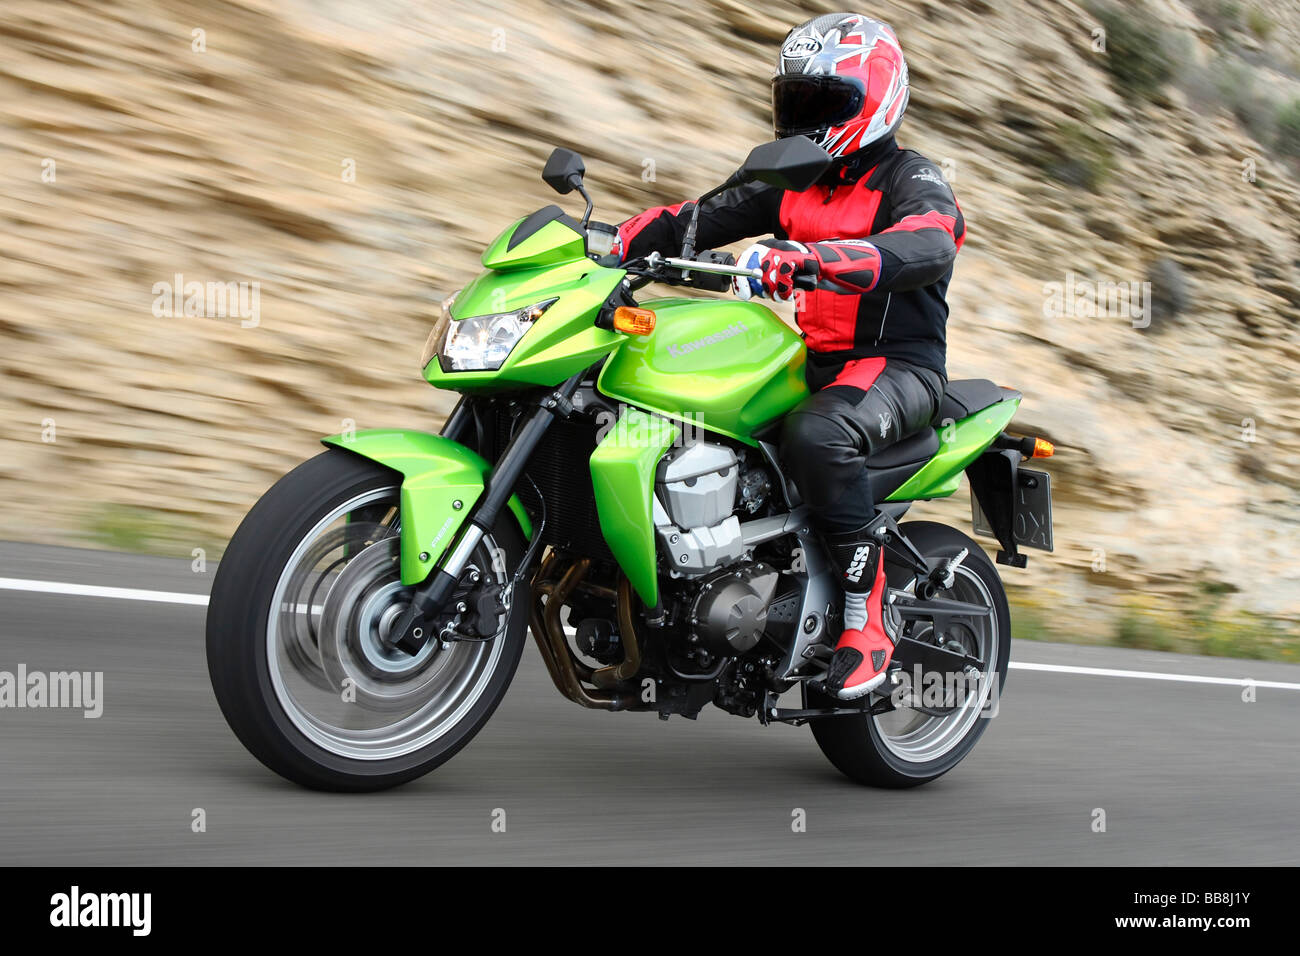 Kawasaki z750 motorcycle hi-res stock photography and images - Alamy